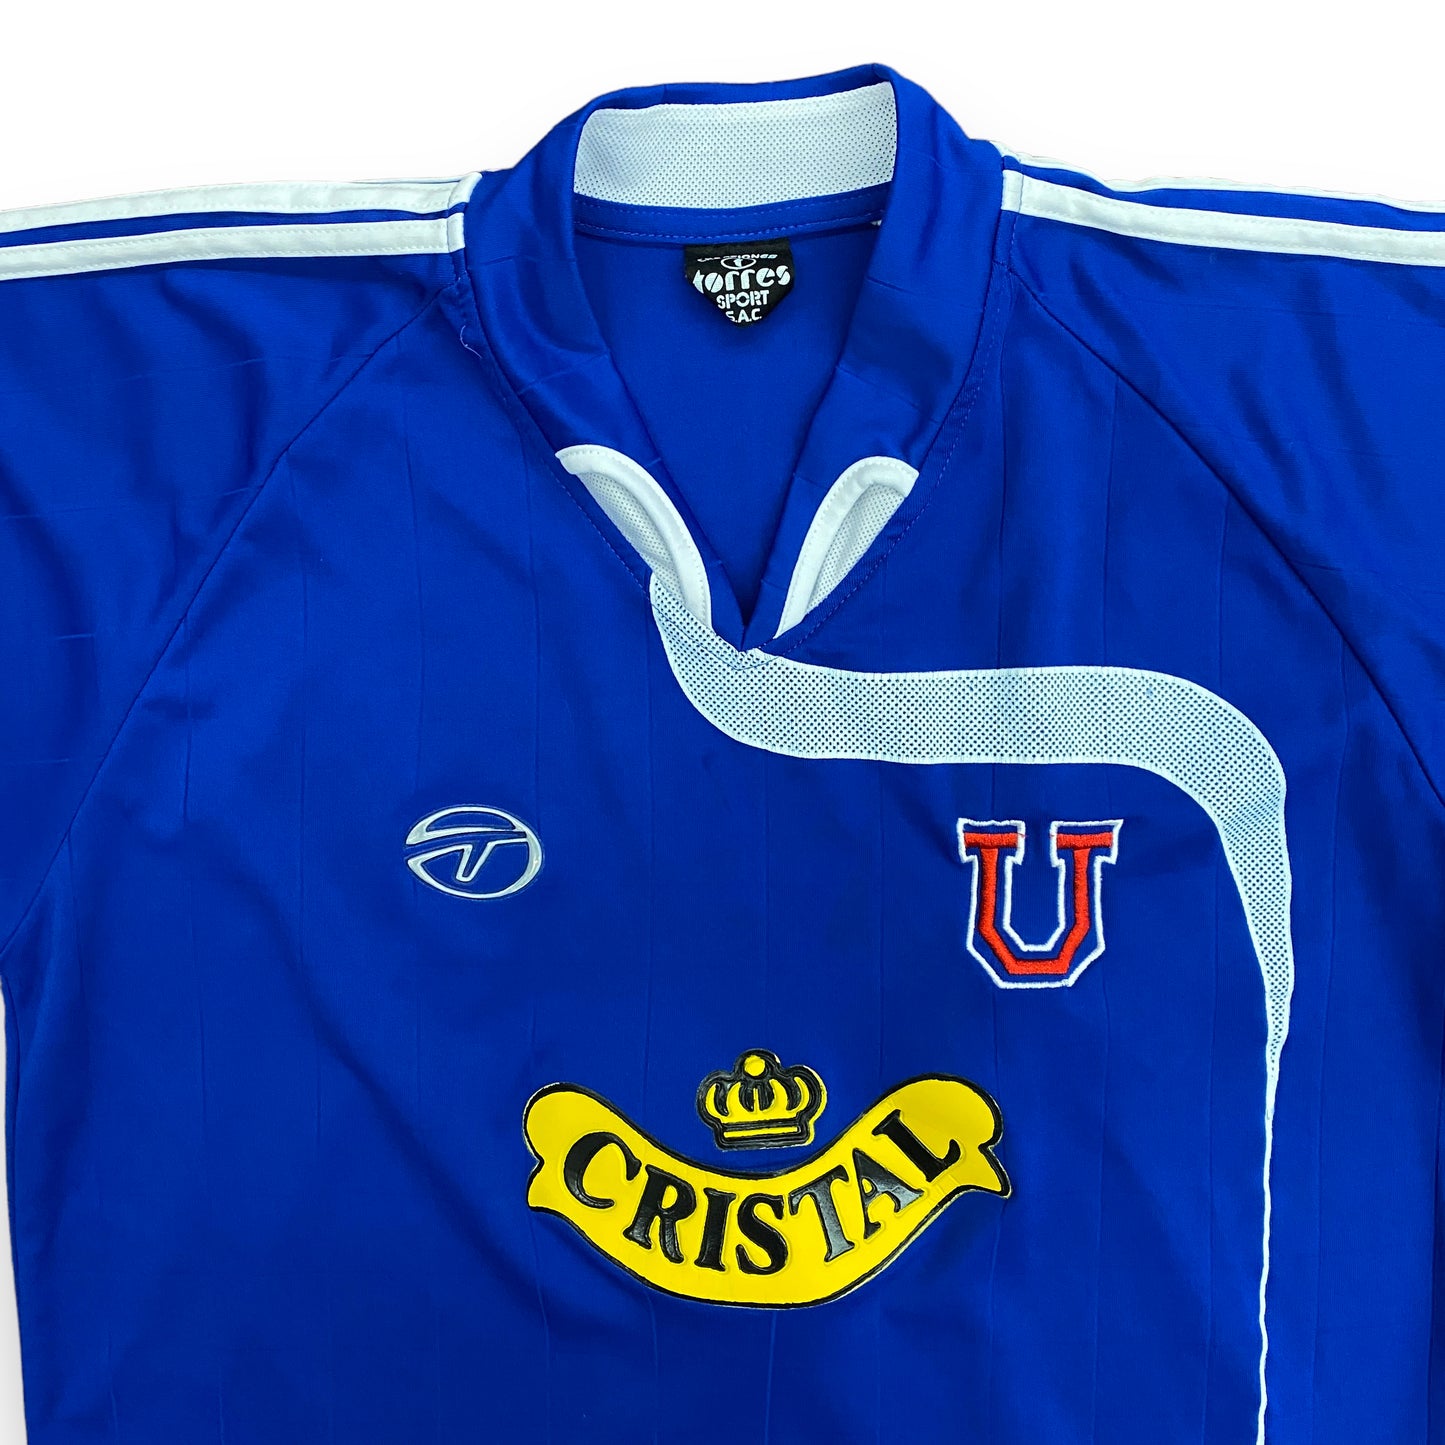 2005/2006 Universidad de Chile Soccer Jersey - Size Medium